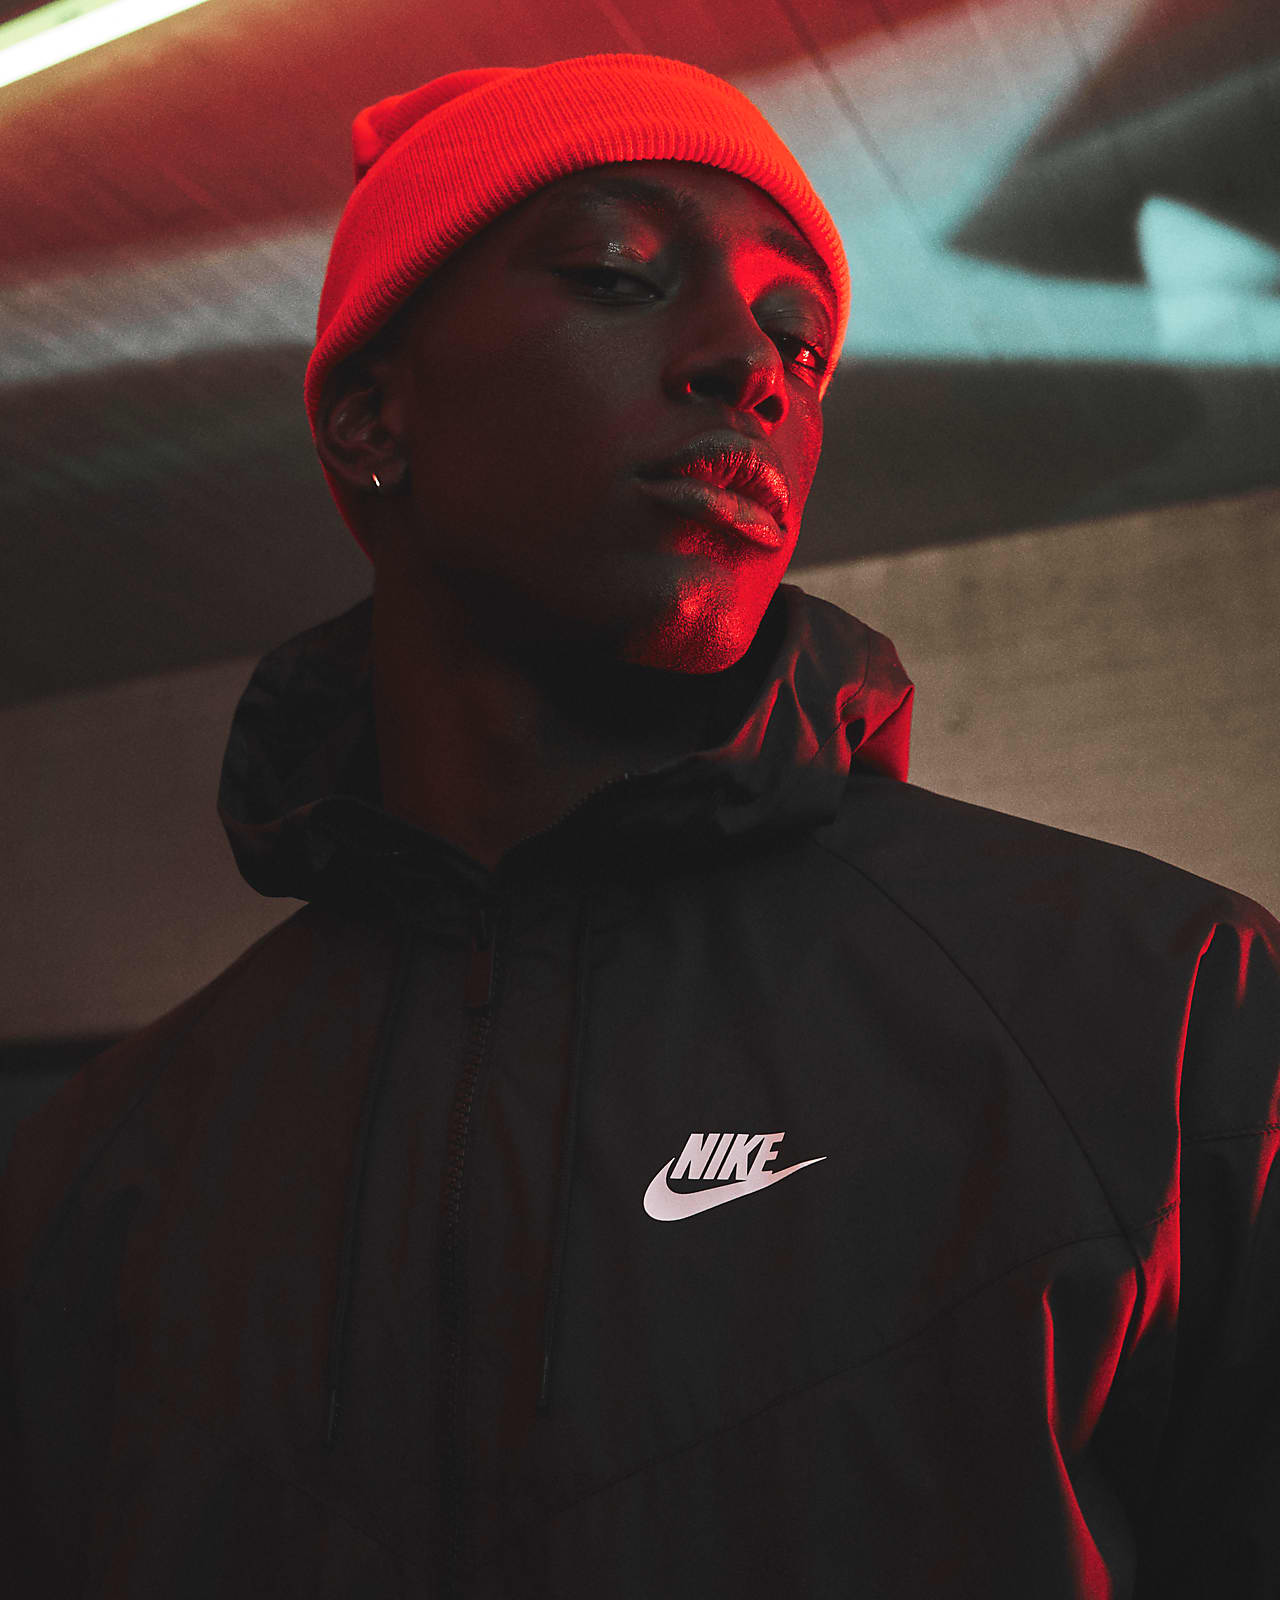 Nike M NSW SF WINDRUNNER HD JKT Blanc / Gris / Noir - Vêtements Doudounes  Homme 162,00 €